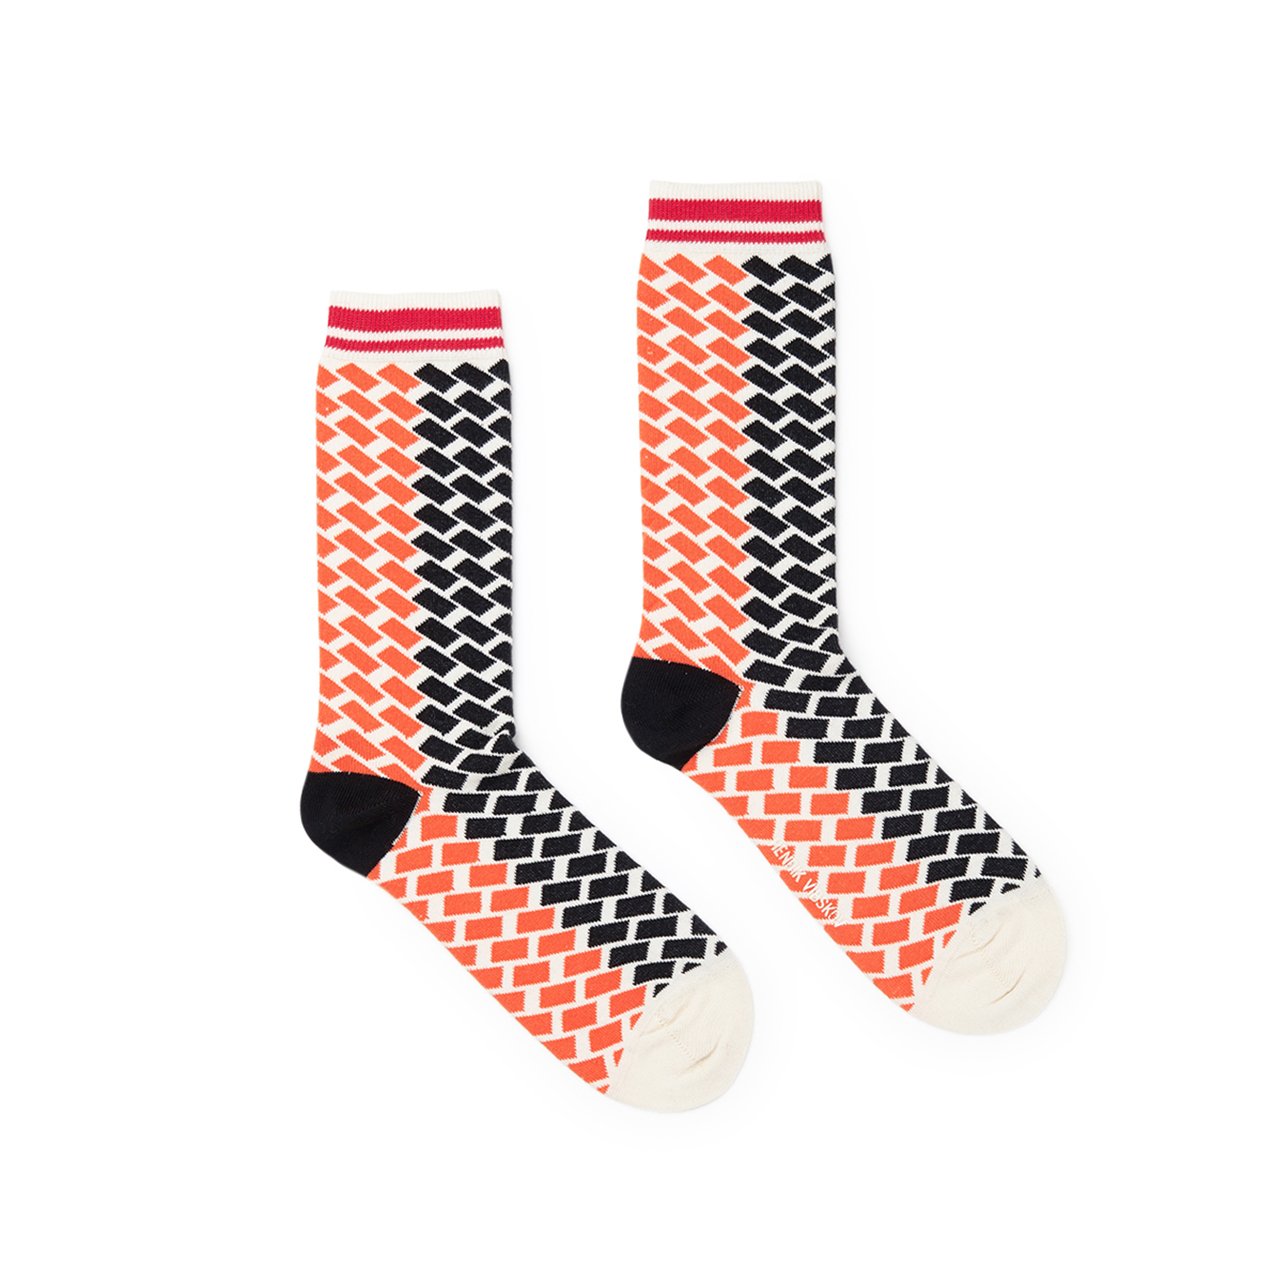 henrik vibskov double bounce socks (orange / black) - ss19-s909 - a.plus - Image - 1